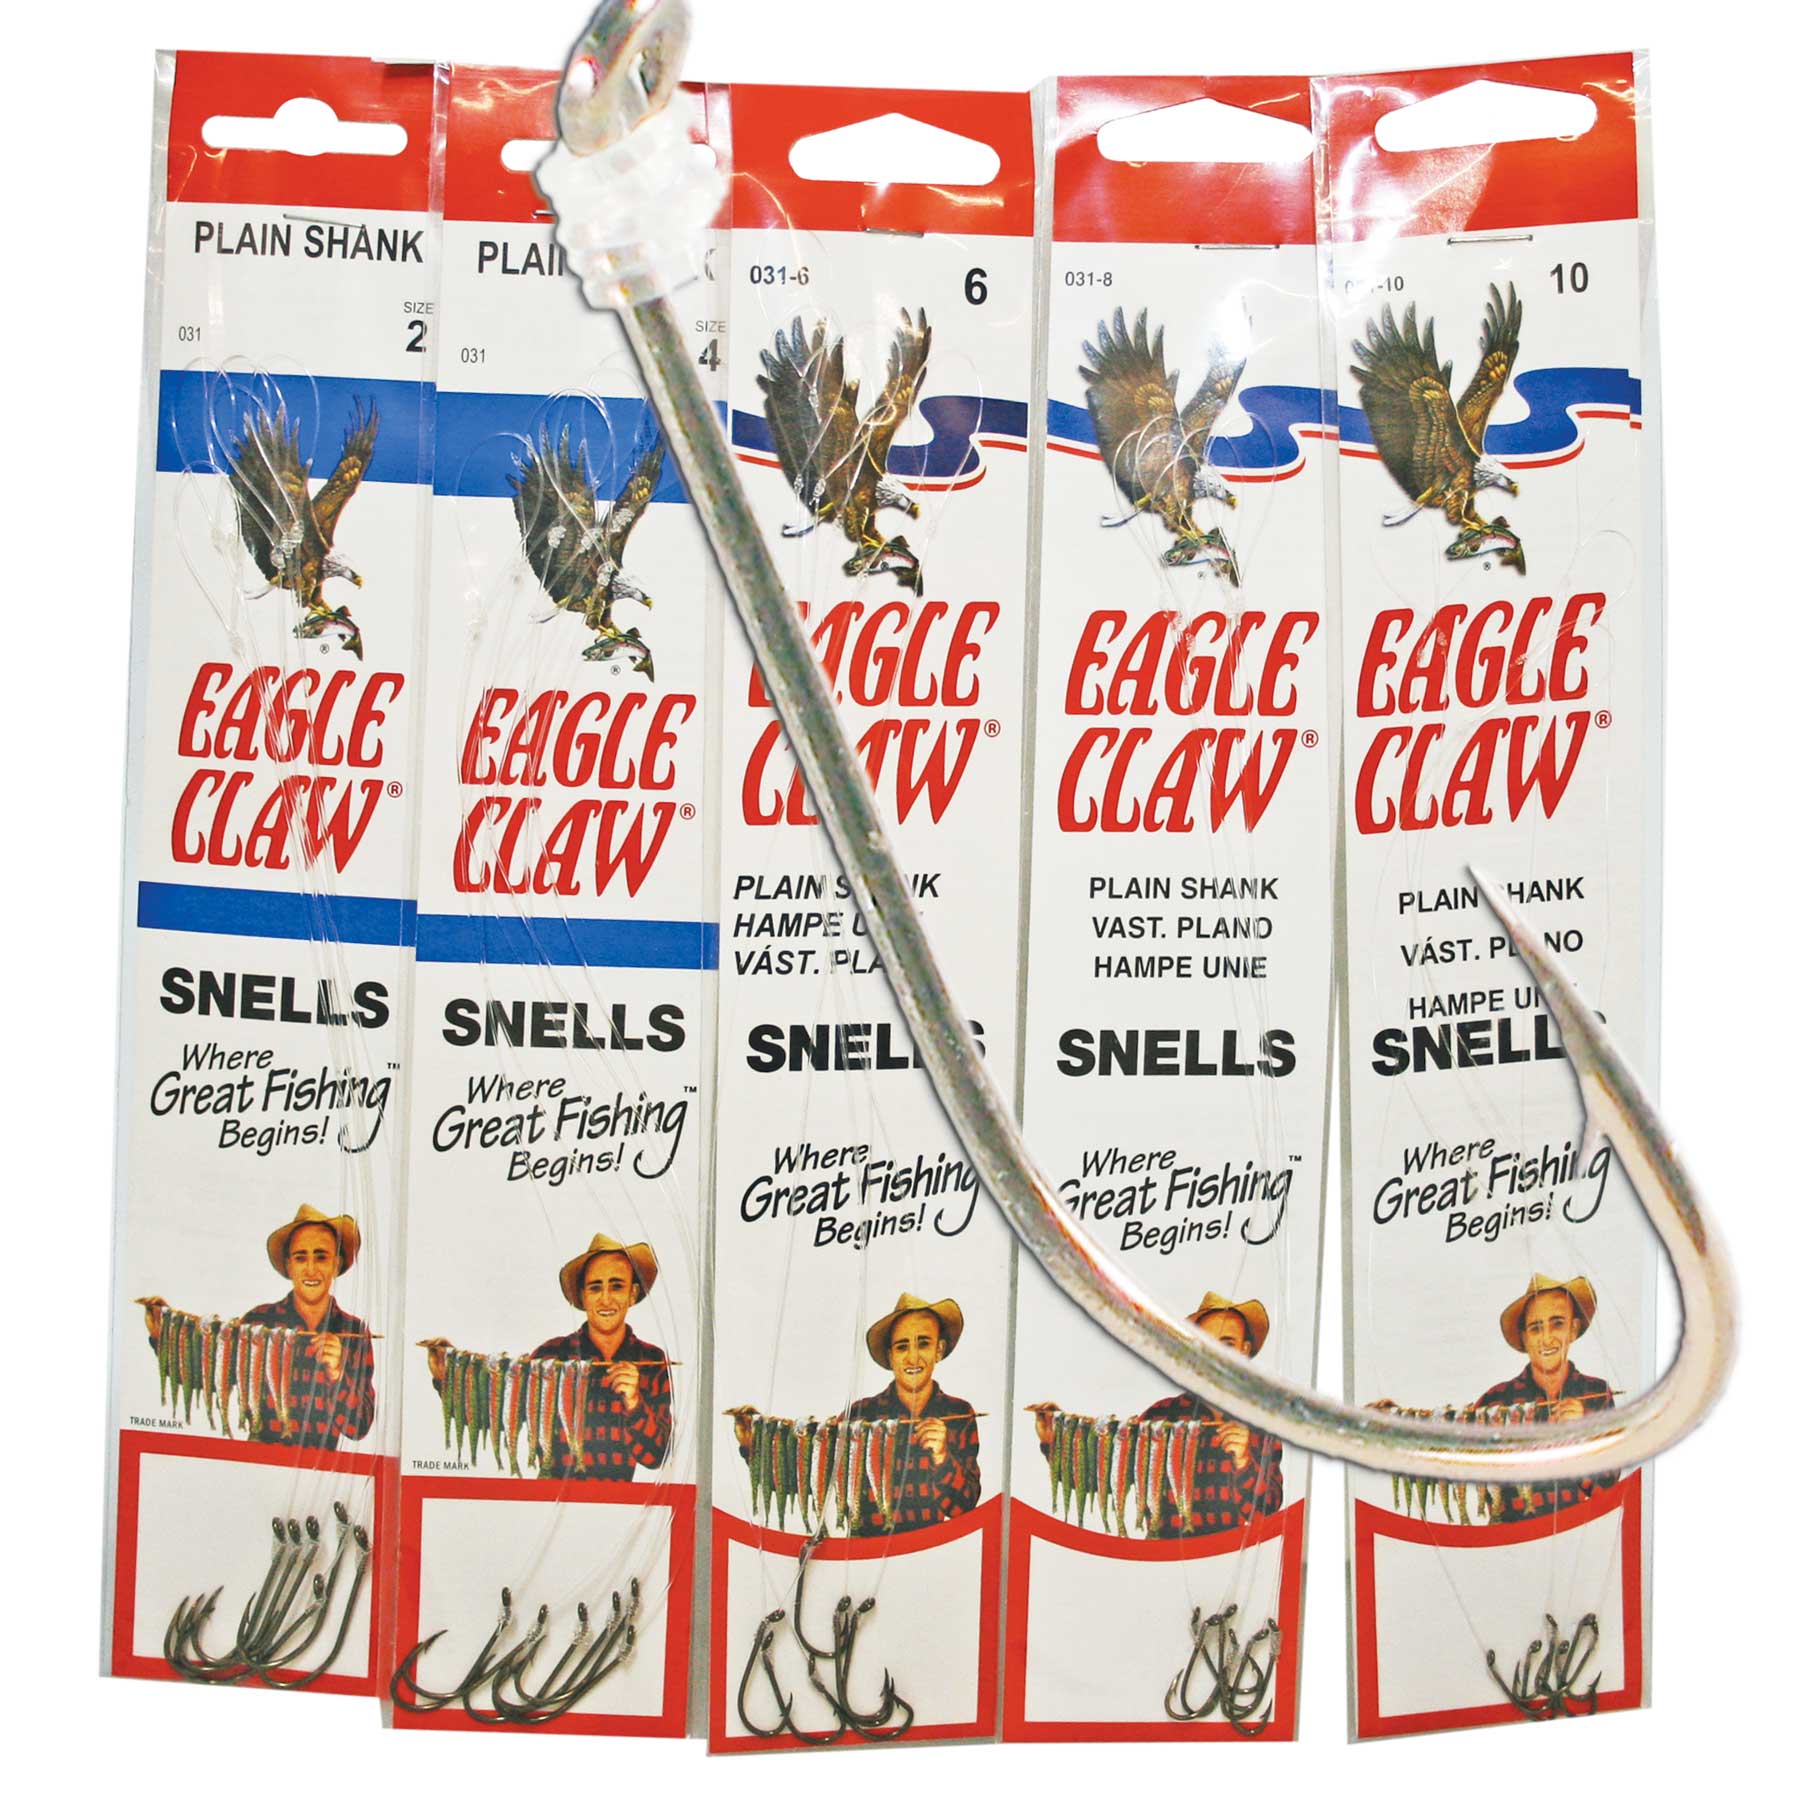 Eagle Claw Baitholder Hooks Snelled - Red - Size 6